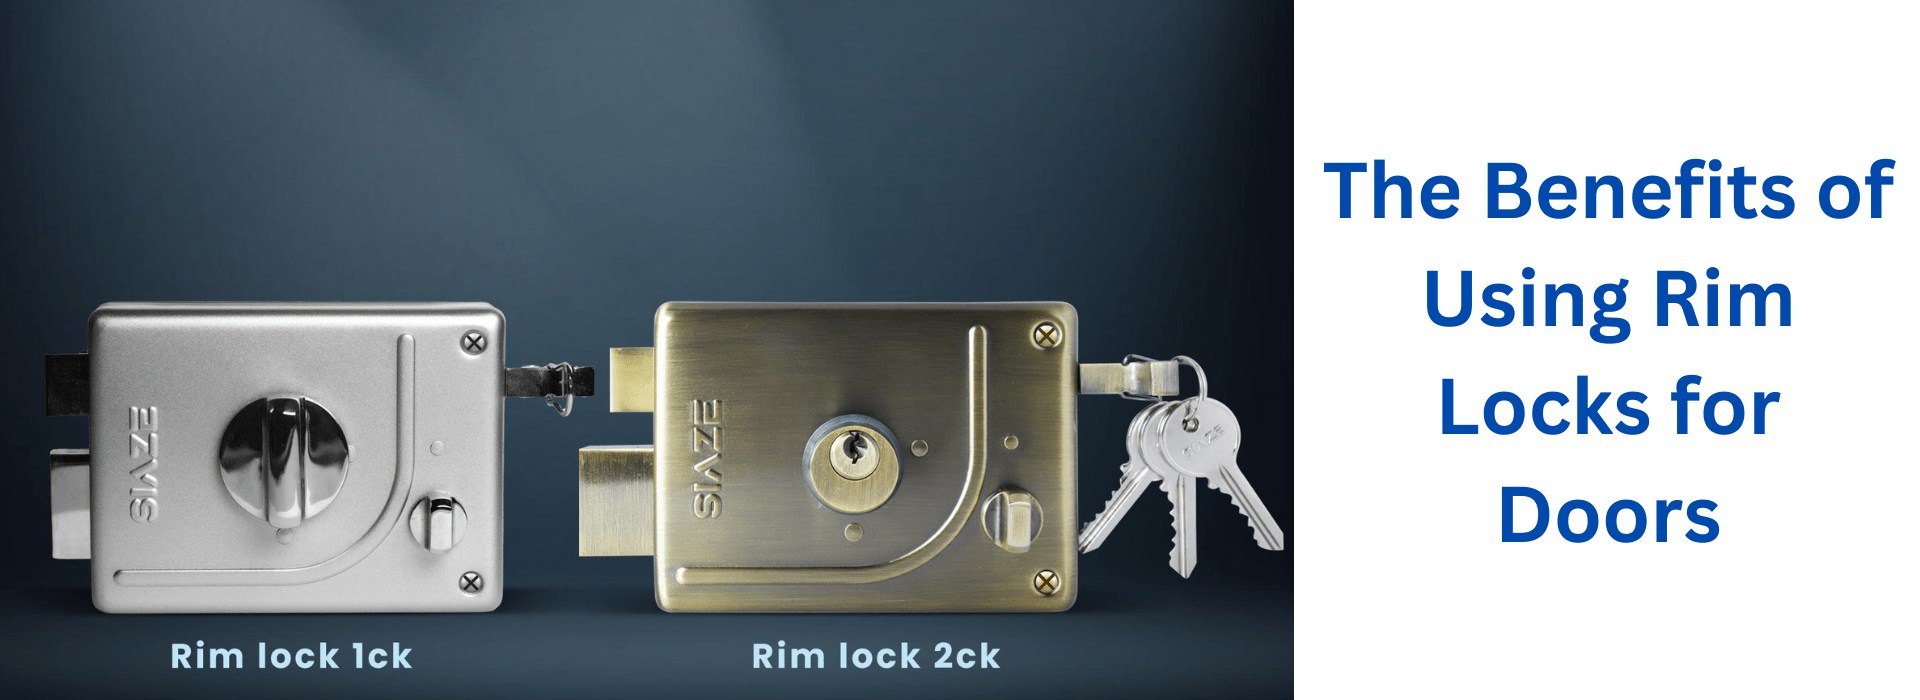 The Benefits of Using Rim Locks for Doors